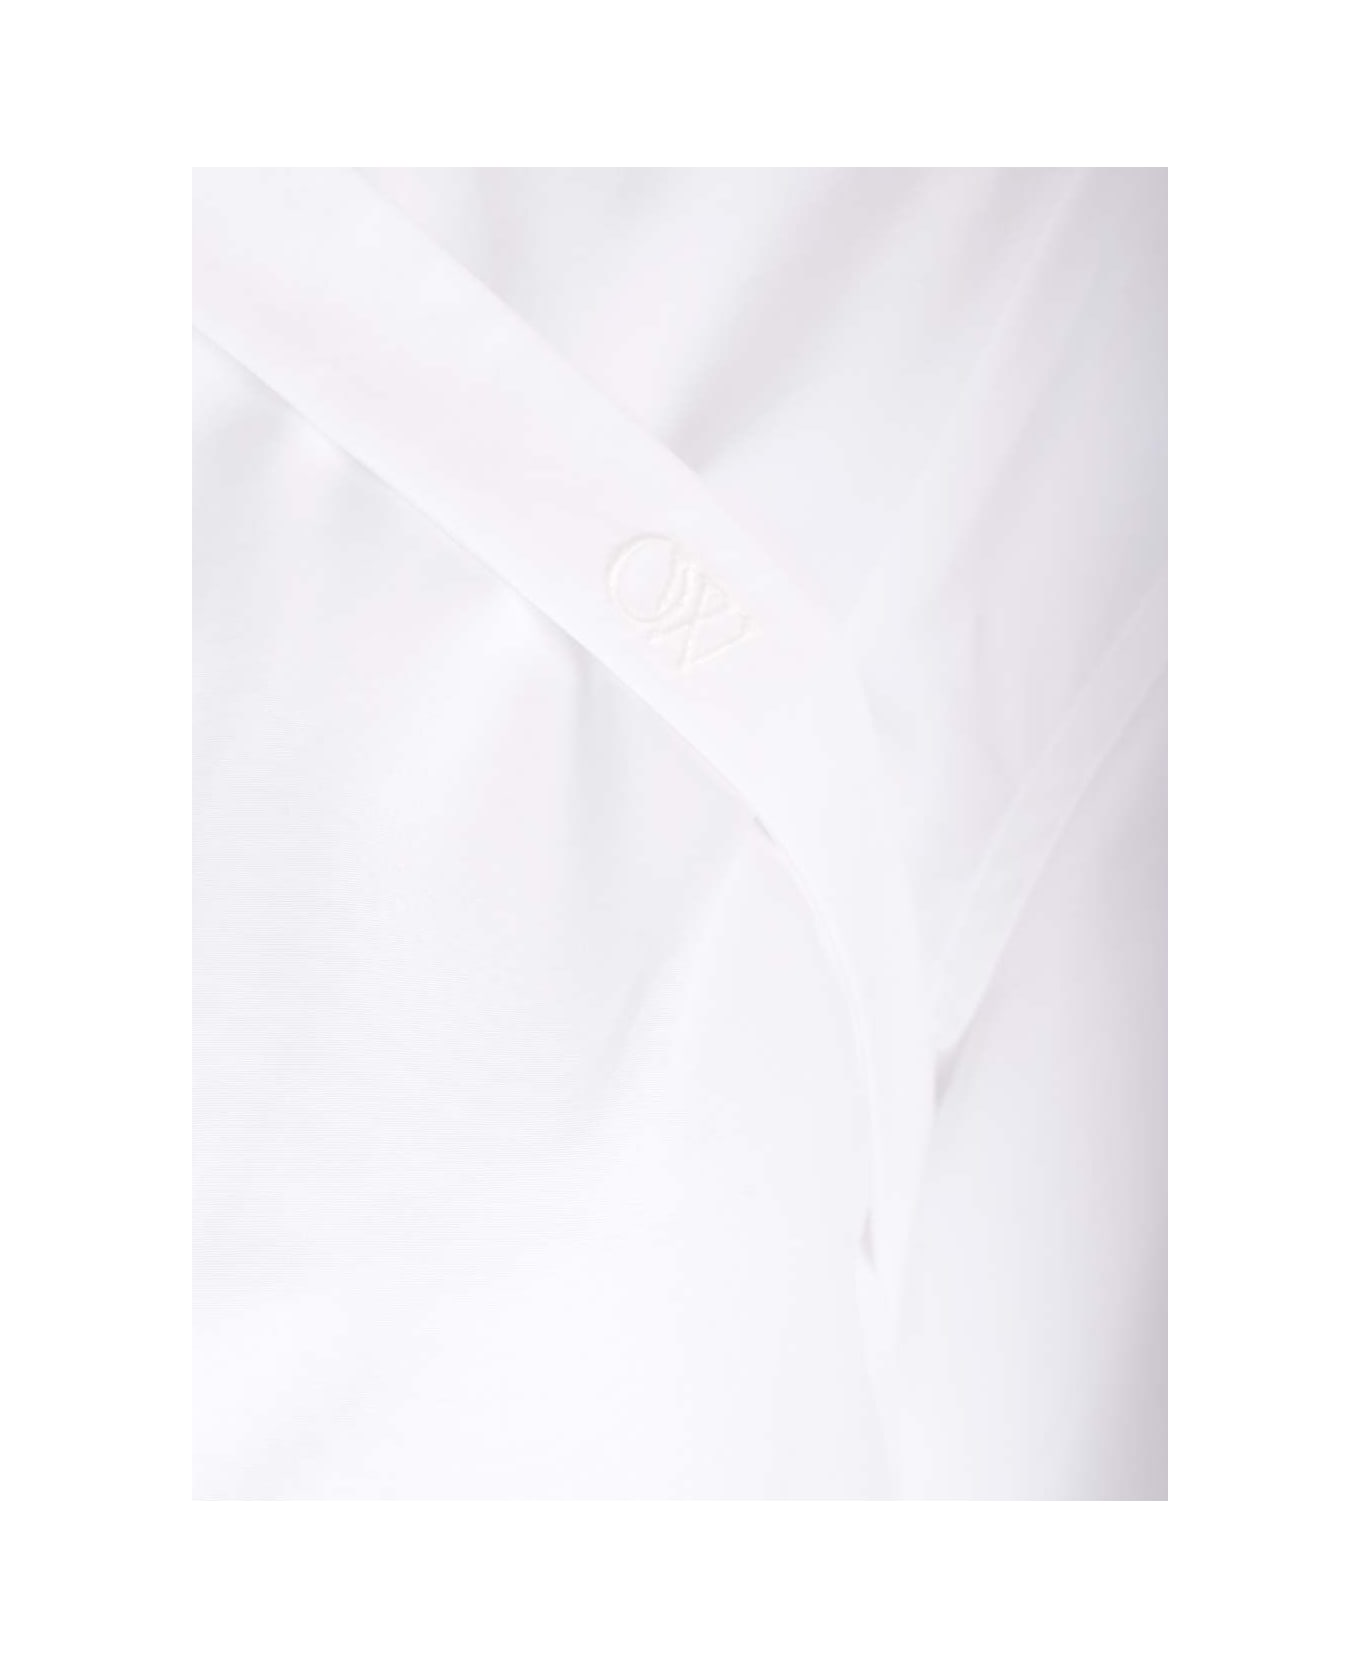 Off-White Harness Collar Shirt - White